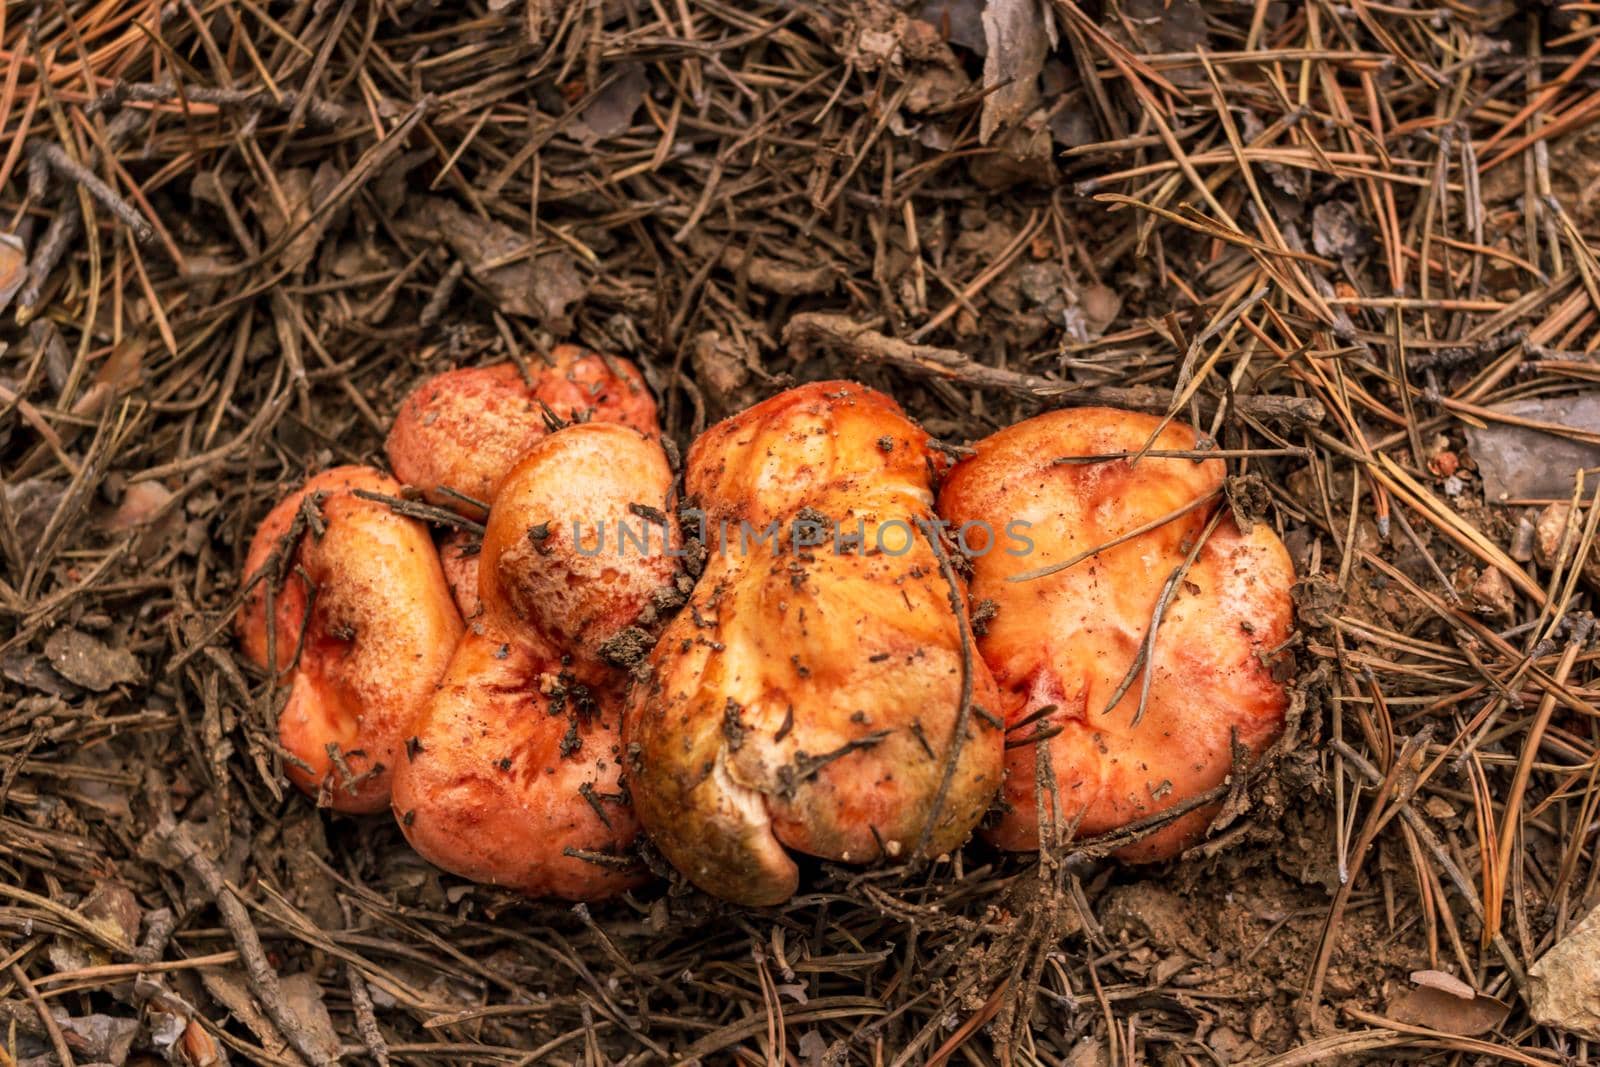 Group of saffron milk cap, Lactarius deliciosus, grows among fallen needles and pinecones in coniferous forest, mushroom picking season, top view, close up, selective focus